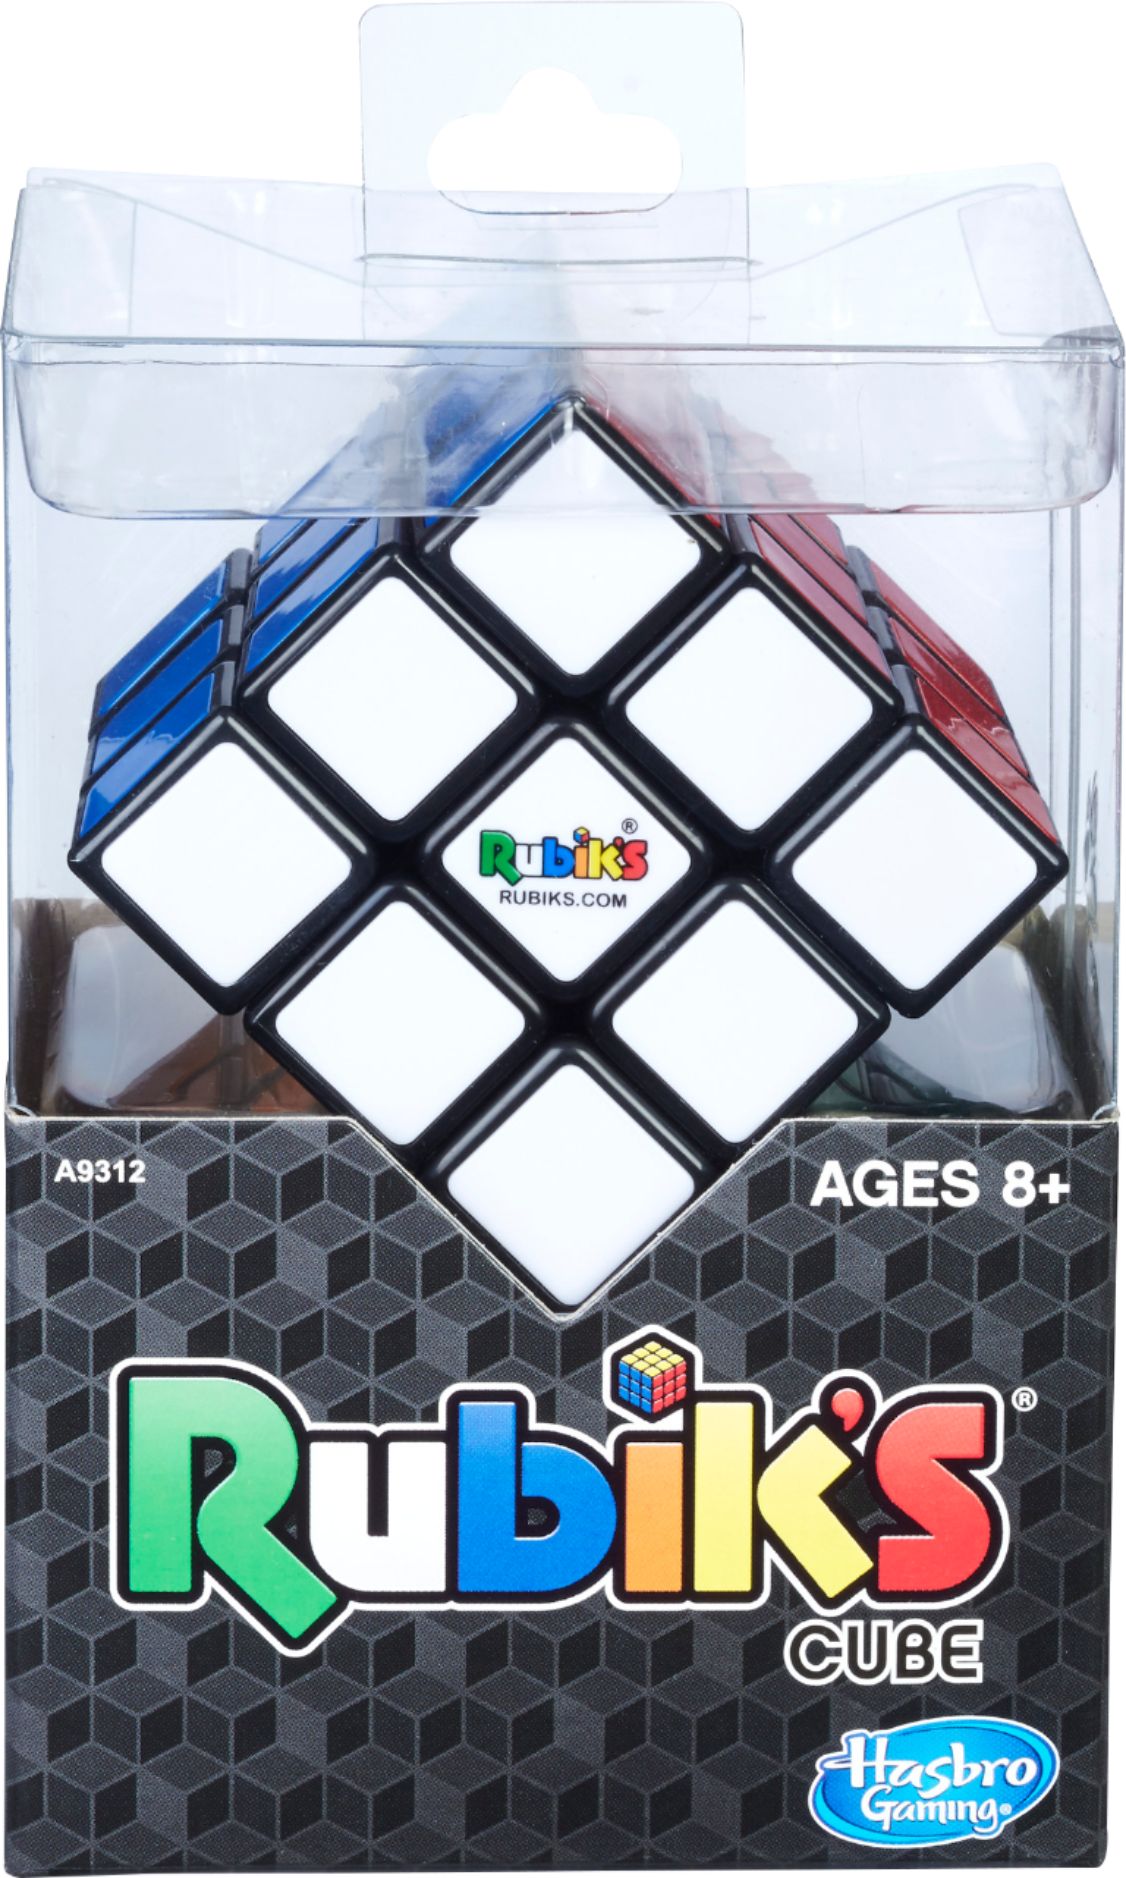 the cube rubik's cube